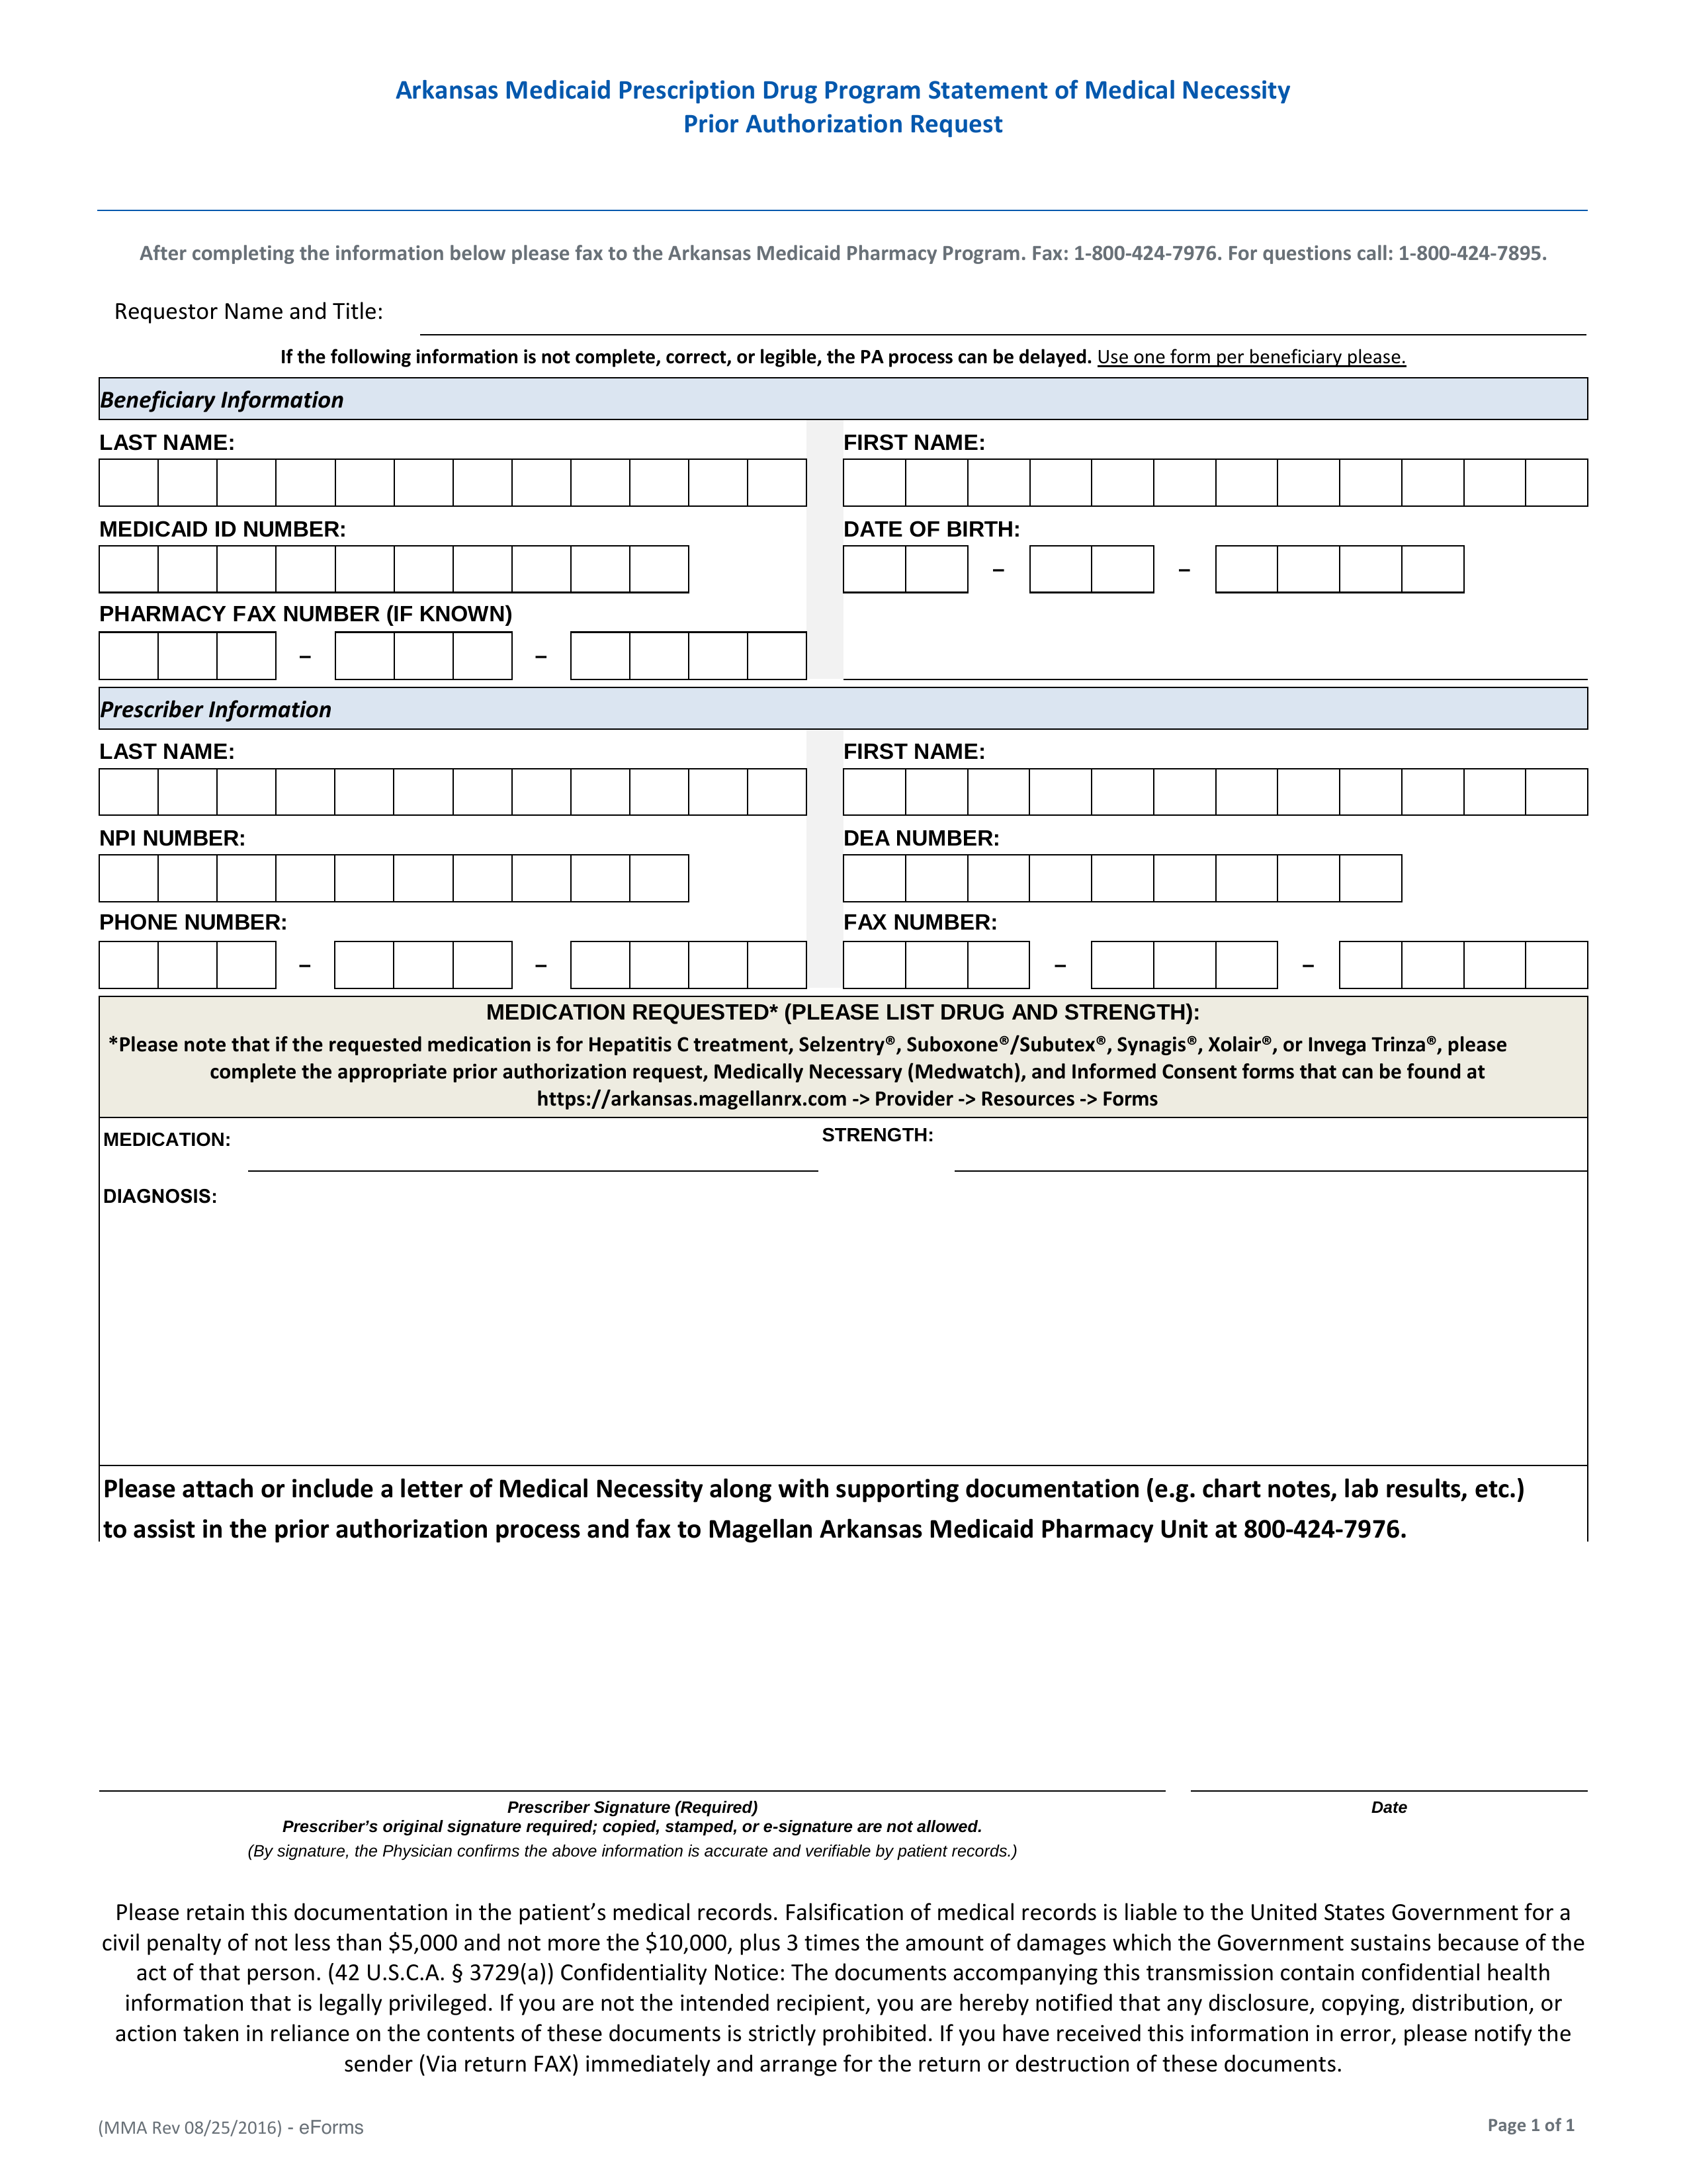 Free Arkansas Medicaid Prior (Rx) Authorization Form - PDF ...